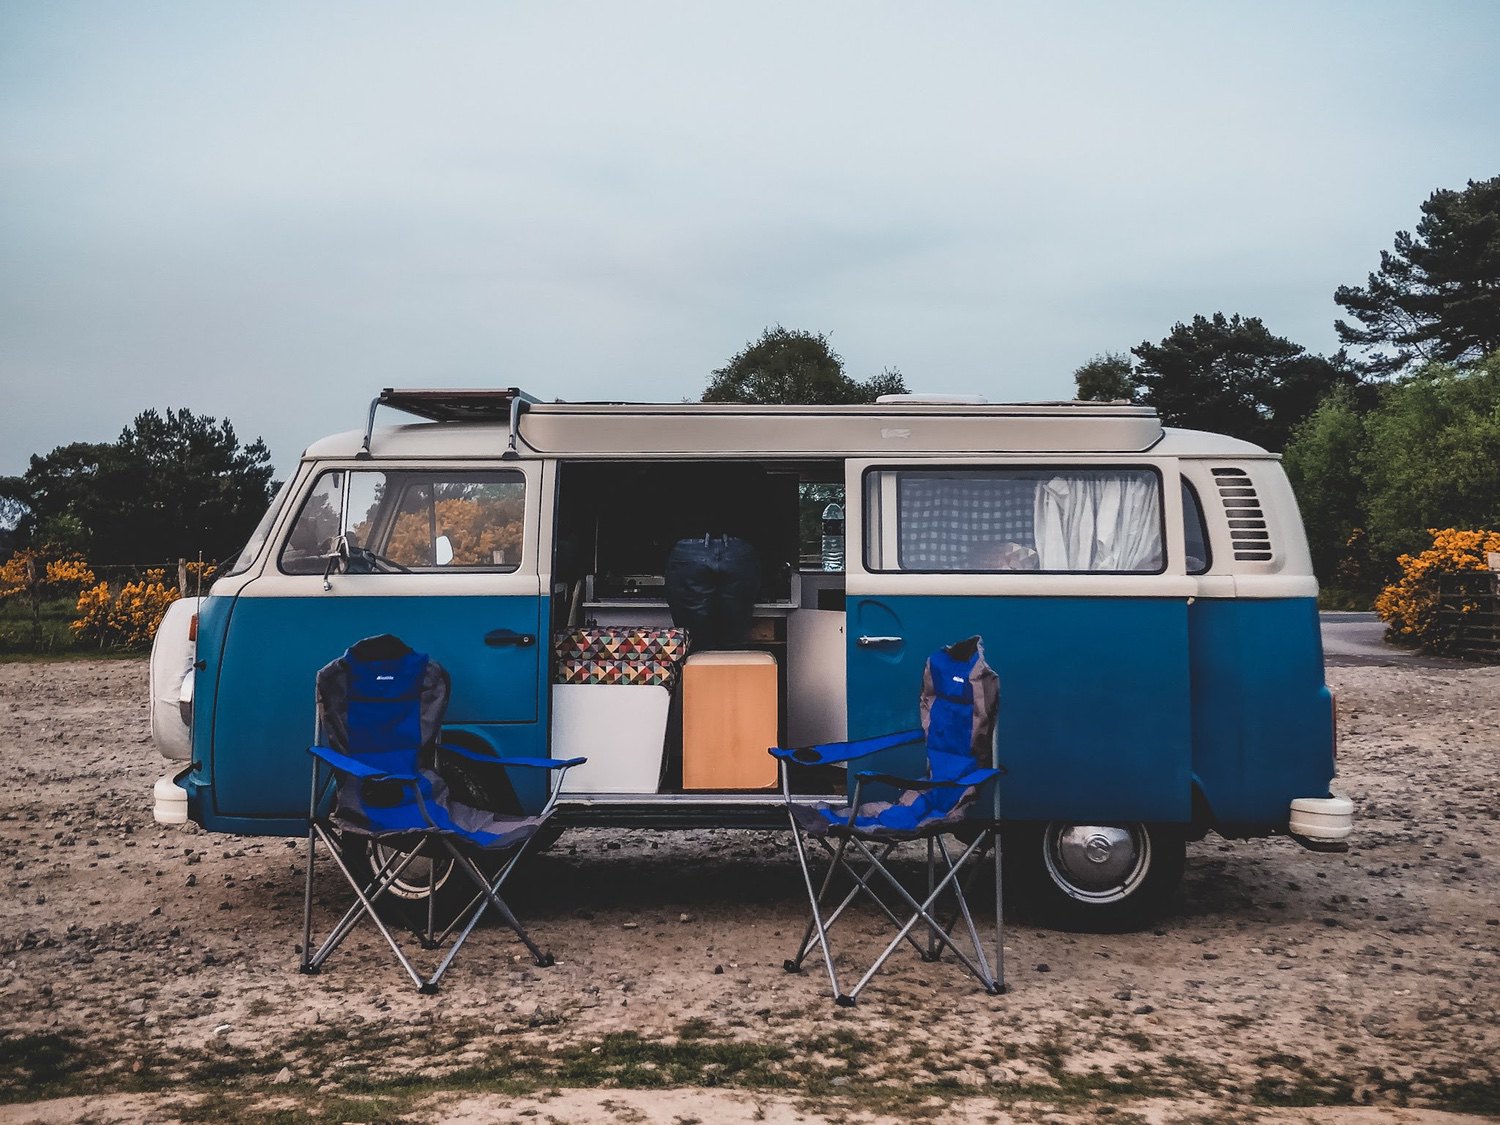 Simon’s VW campervan